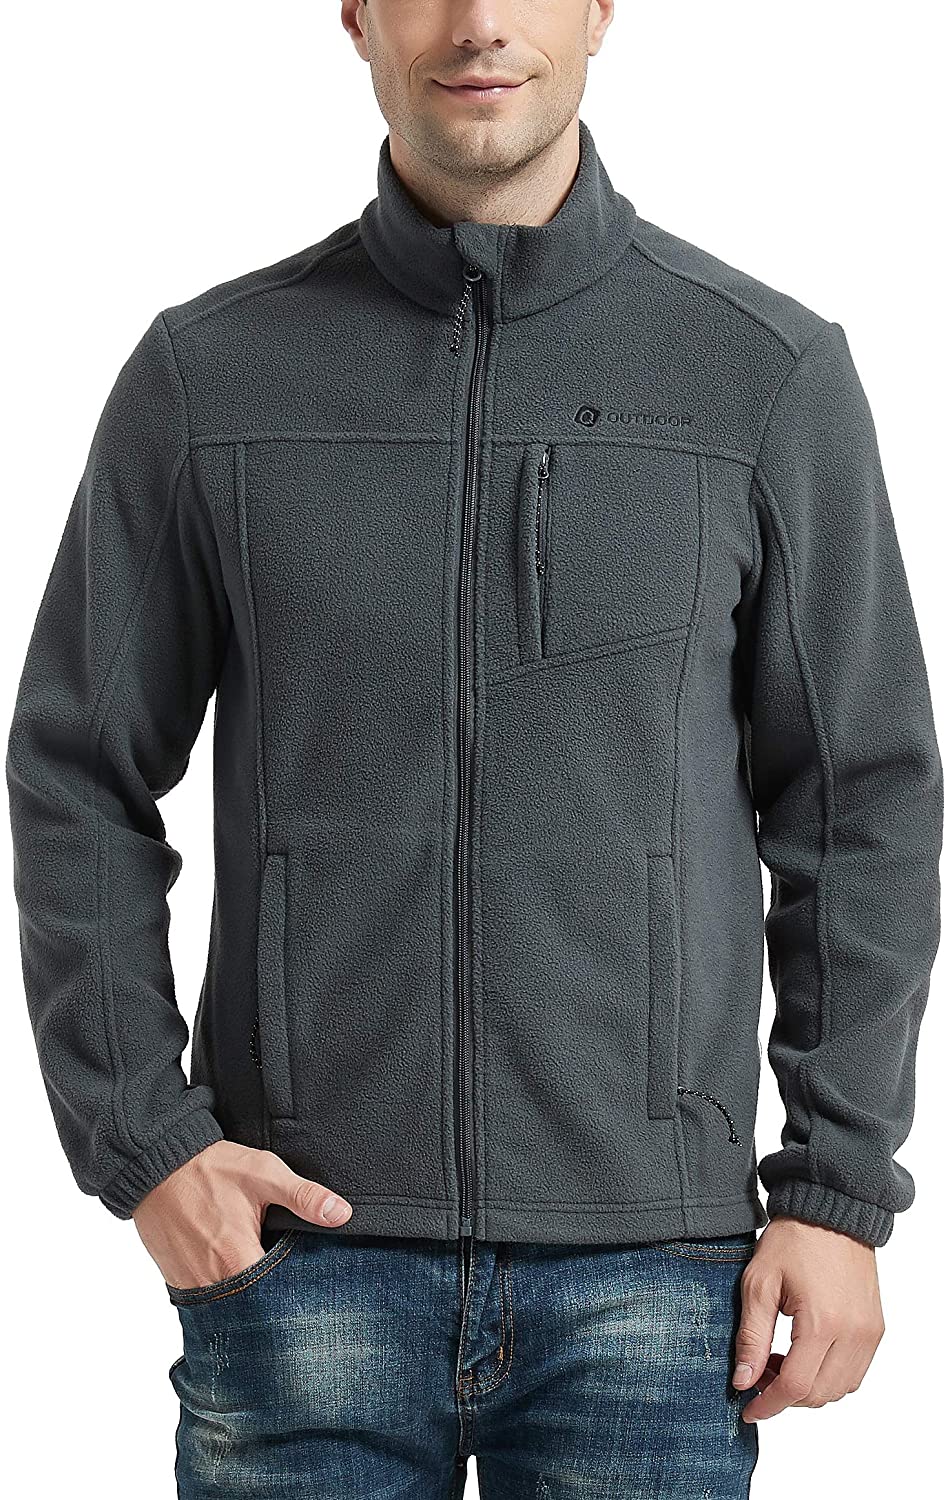 TBMPOY Mens Full-Zip Fleece Jacket Soft Polar Winter Outdoor Coat with Pockets